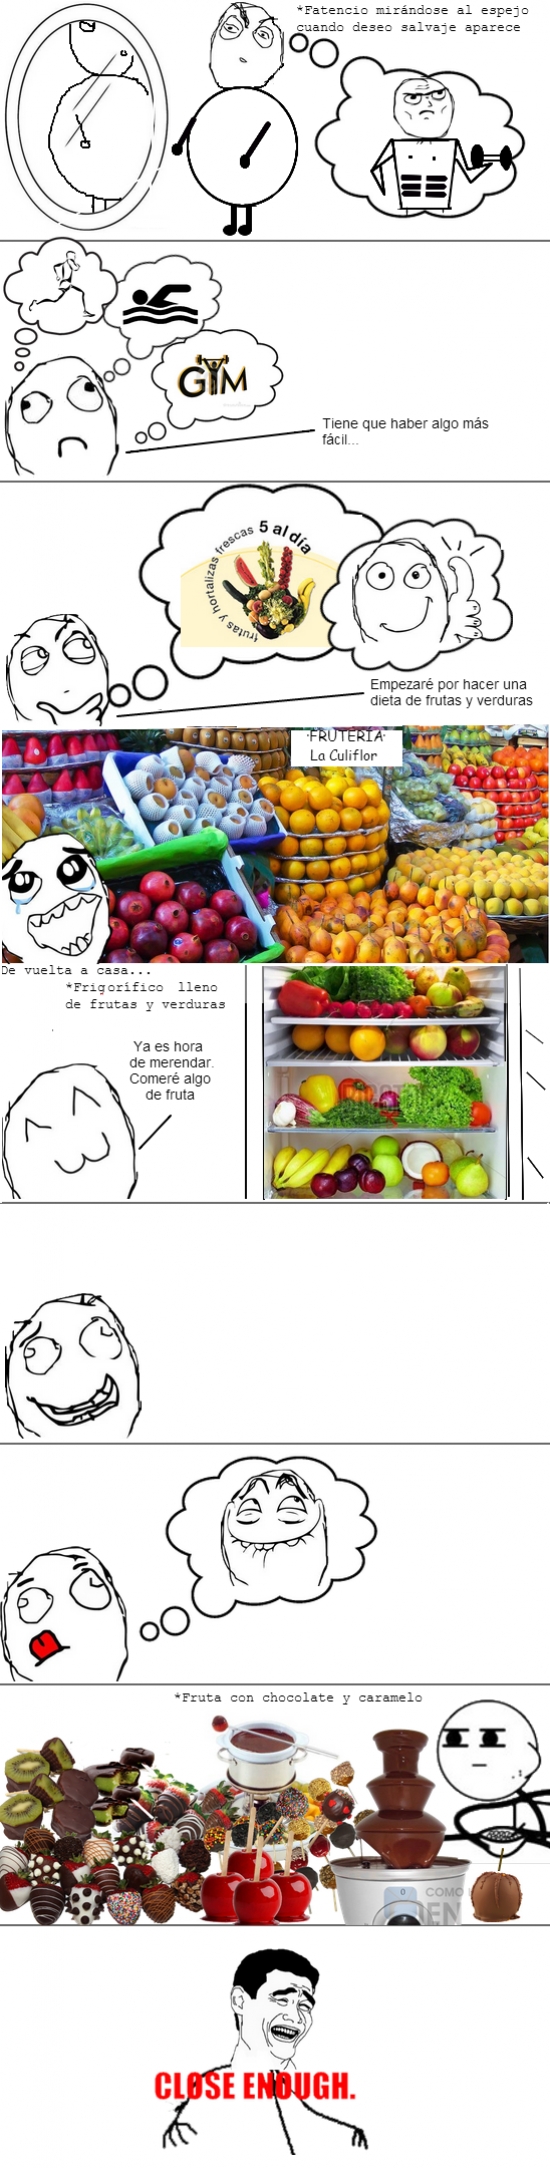 Yao - Una dieta a base de fruta